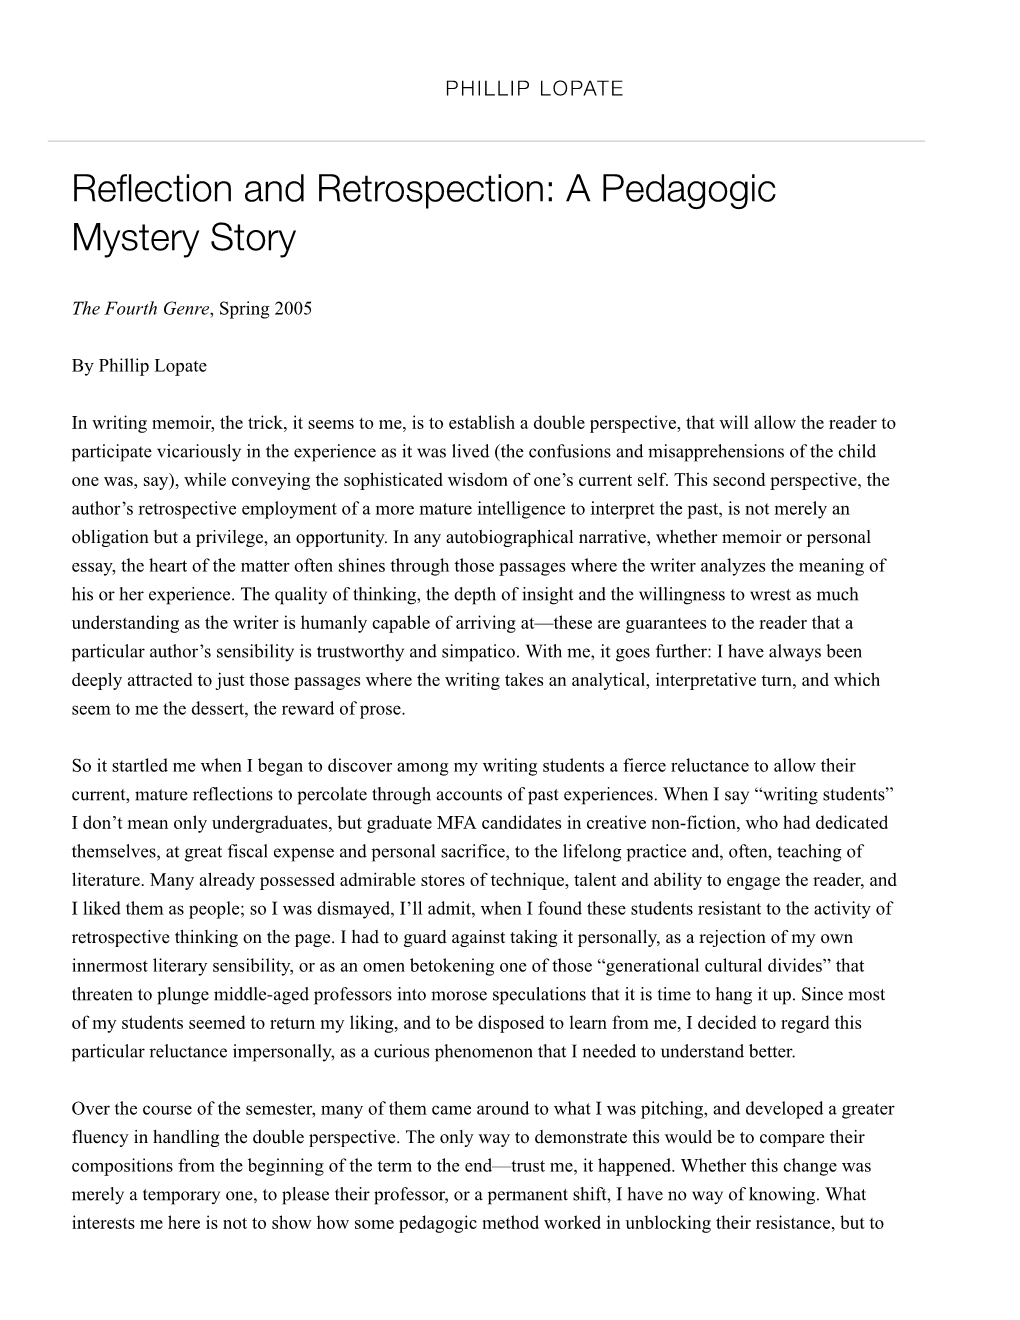 Reflection and Retrospection: a Pedagogic Mystery Story